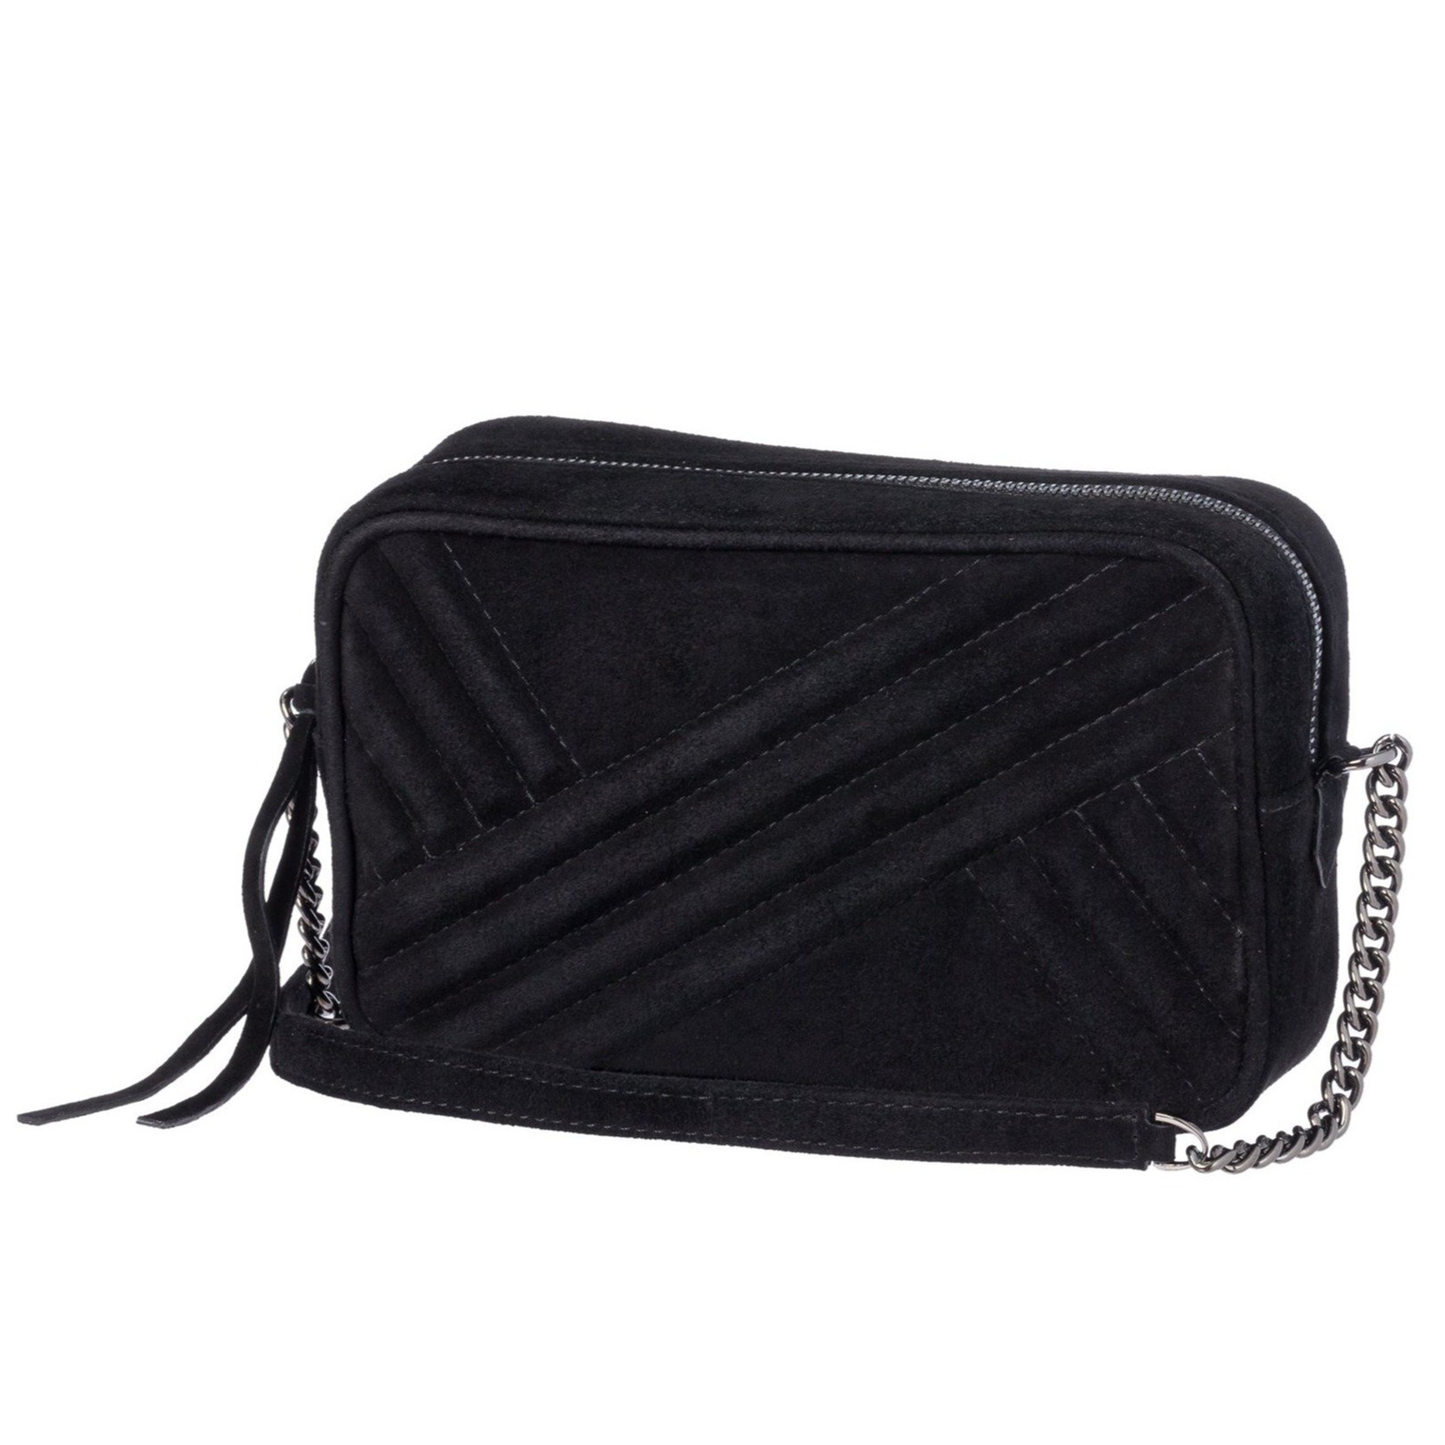 Handbag in Black Suede Leather